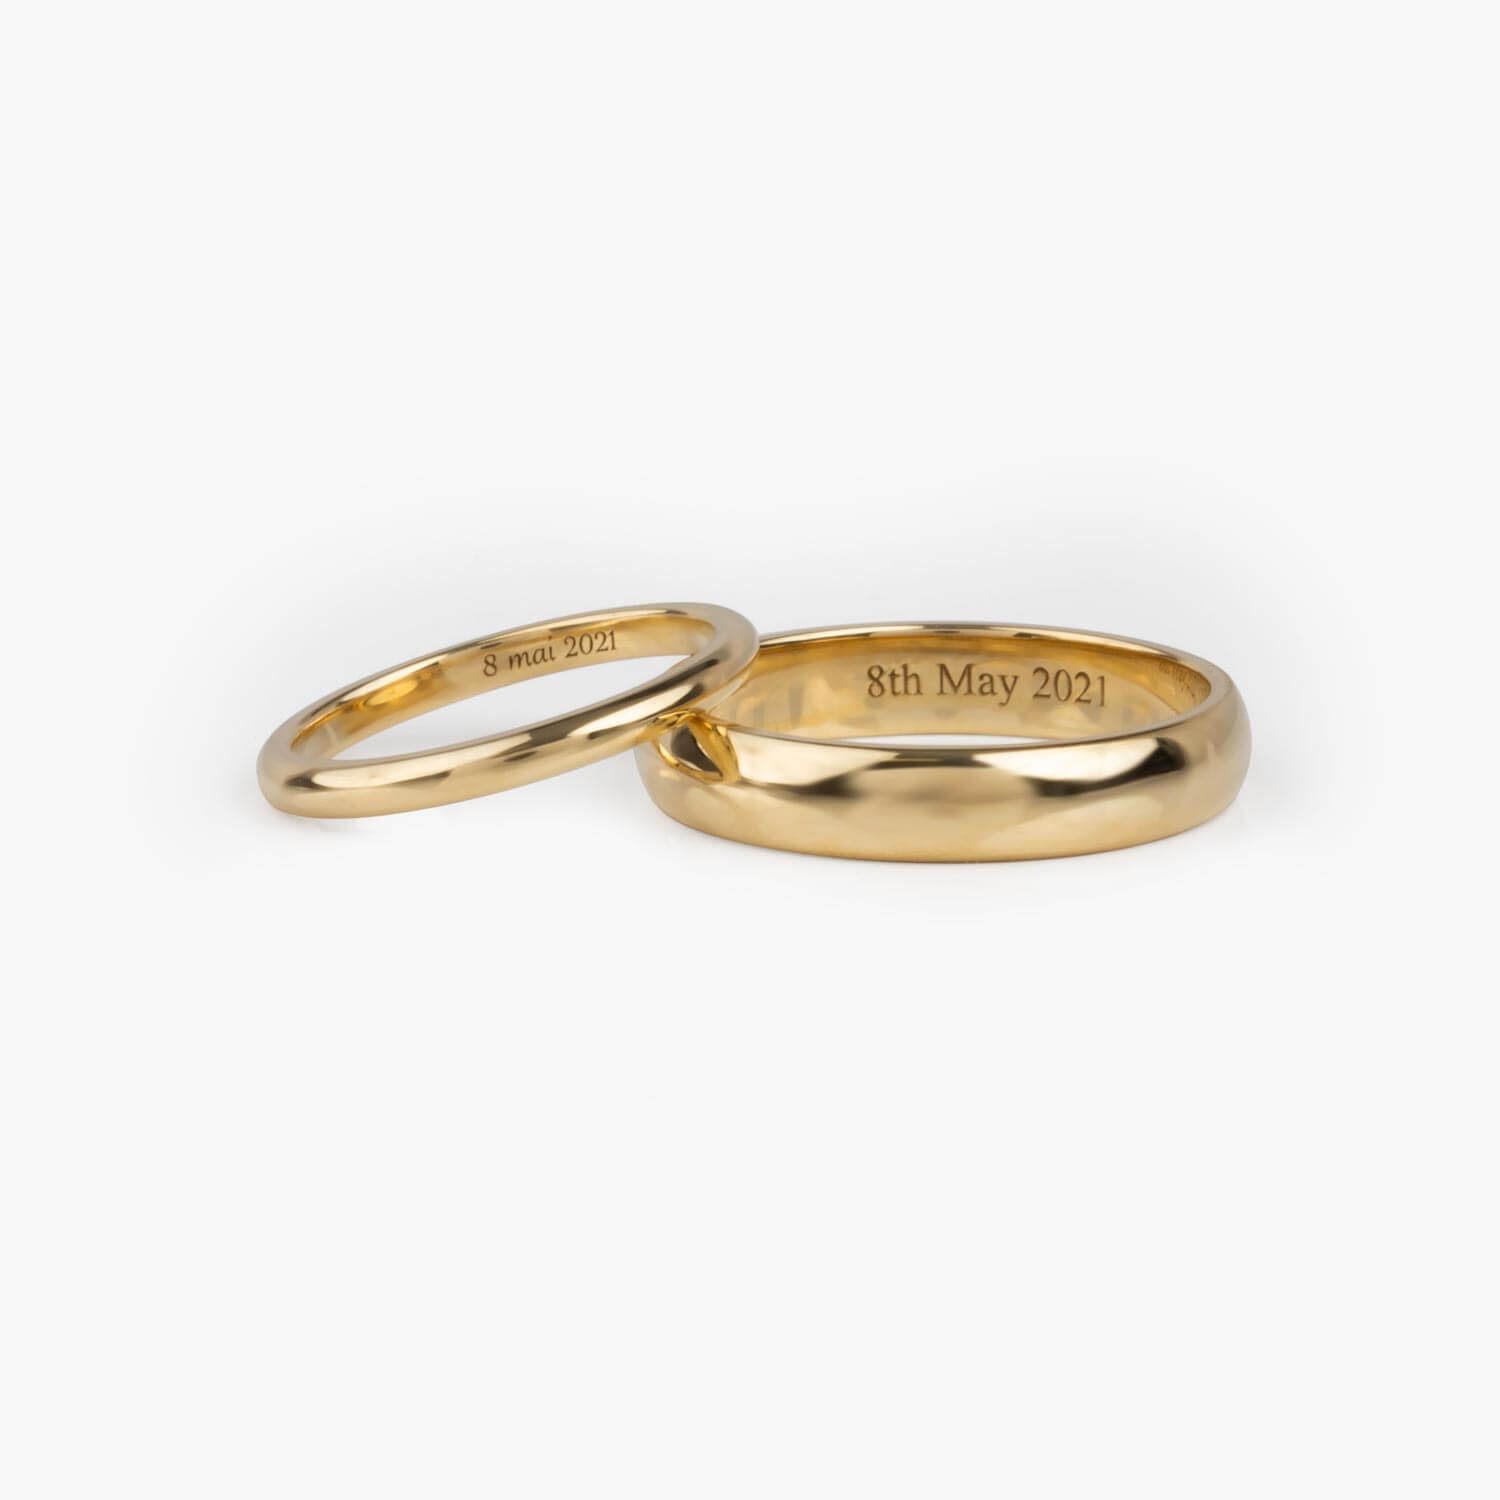 Gold laser engraved wedding rings